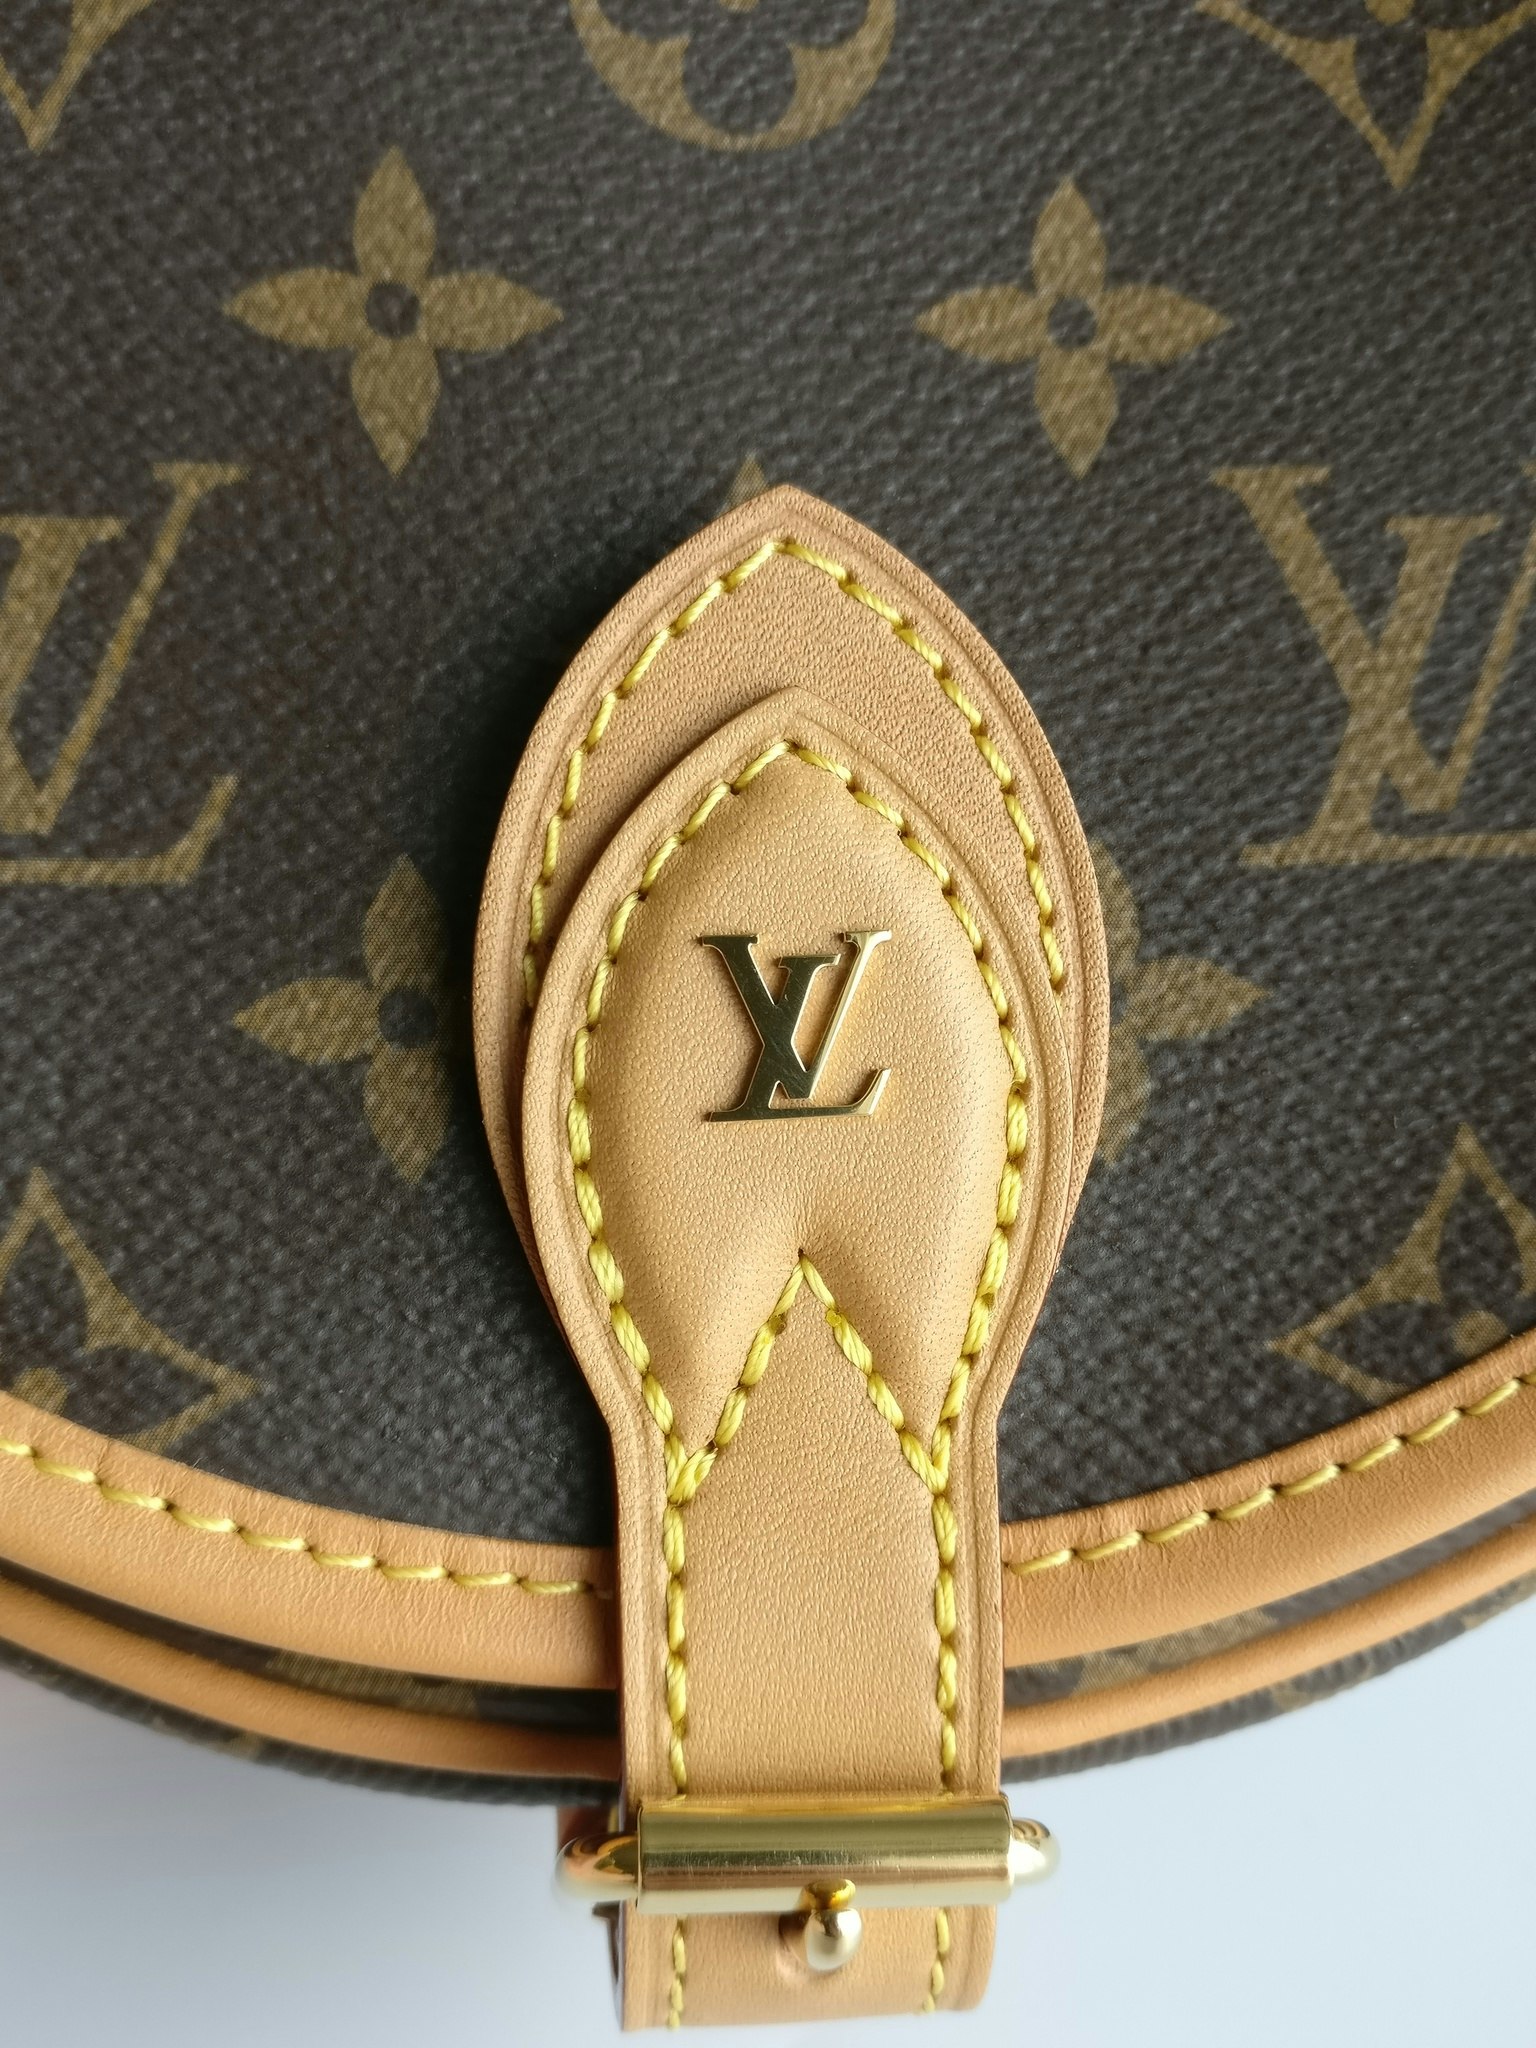 Louis Vuitton Tambourine BRAND NEW RM7XXX www.wasap.my/60124330090